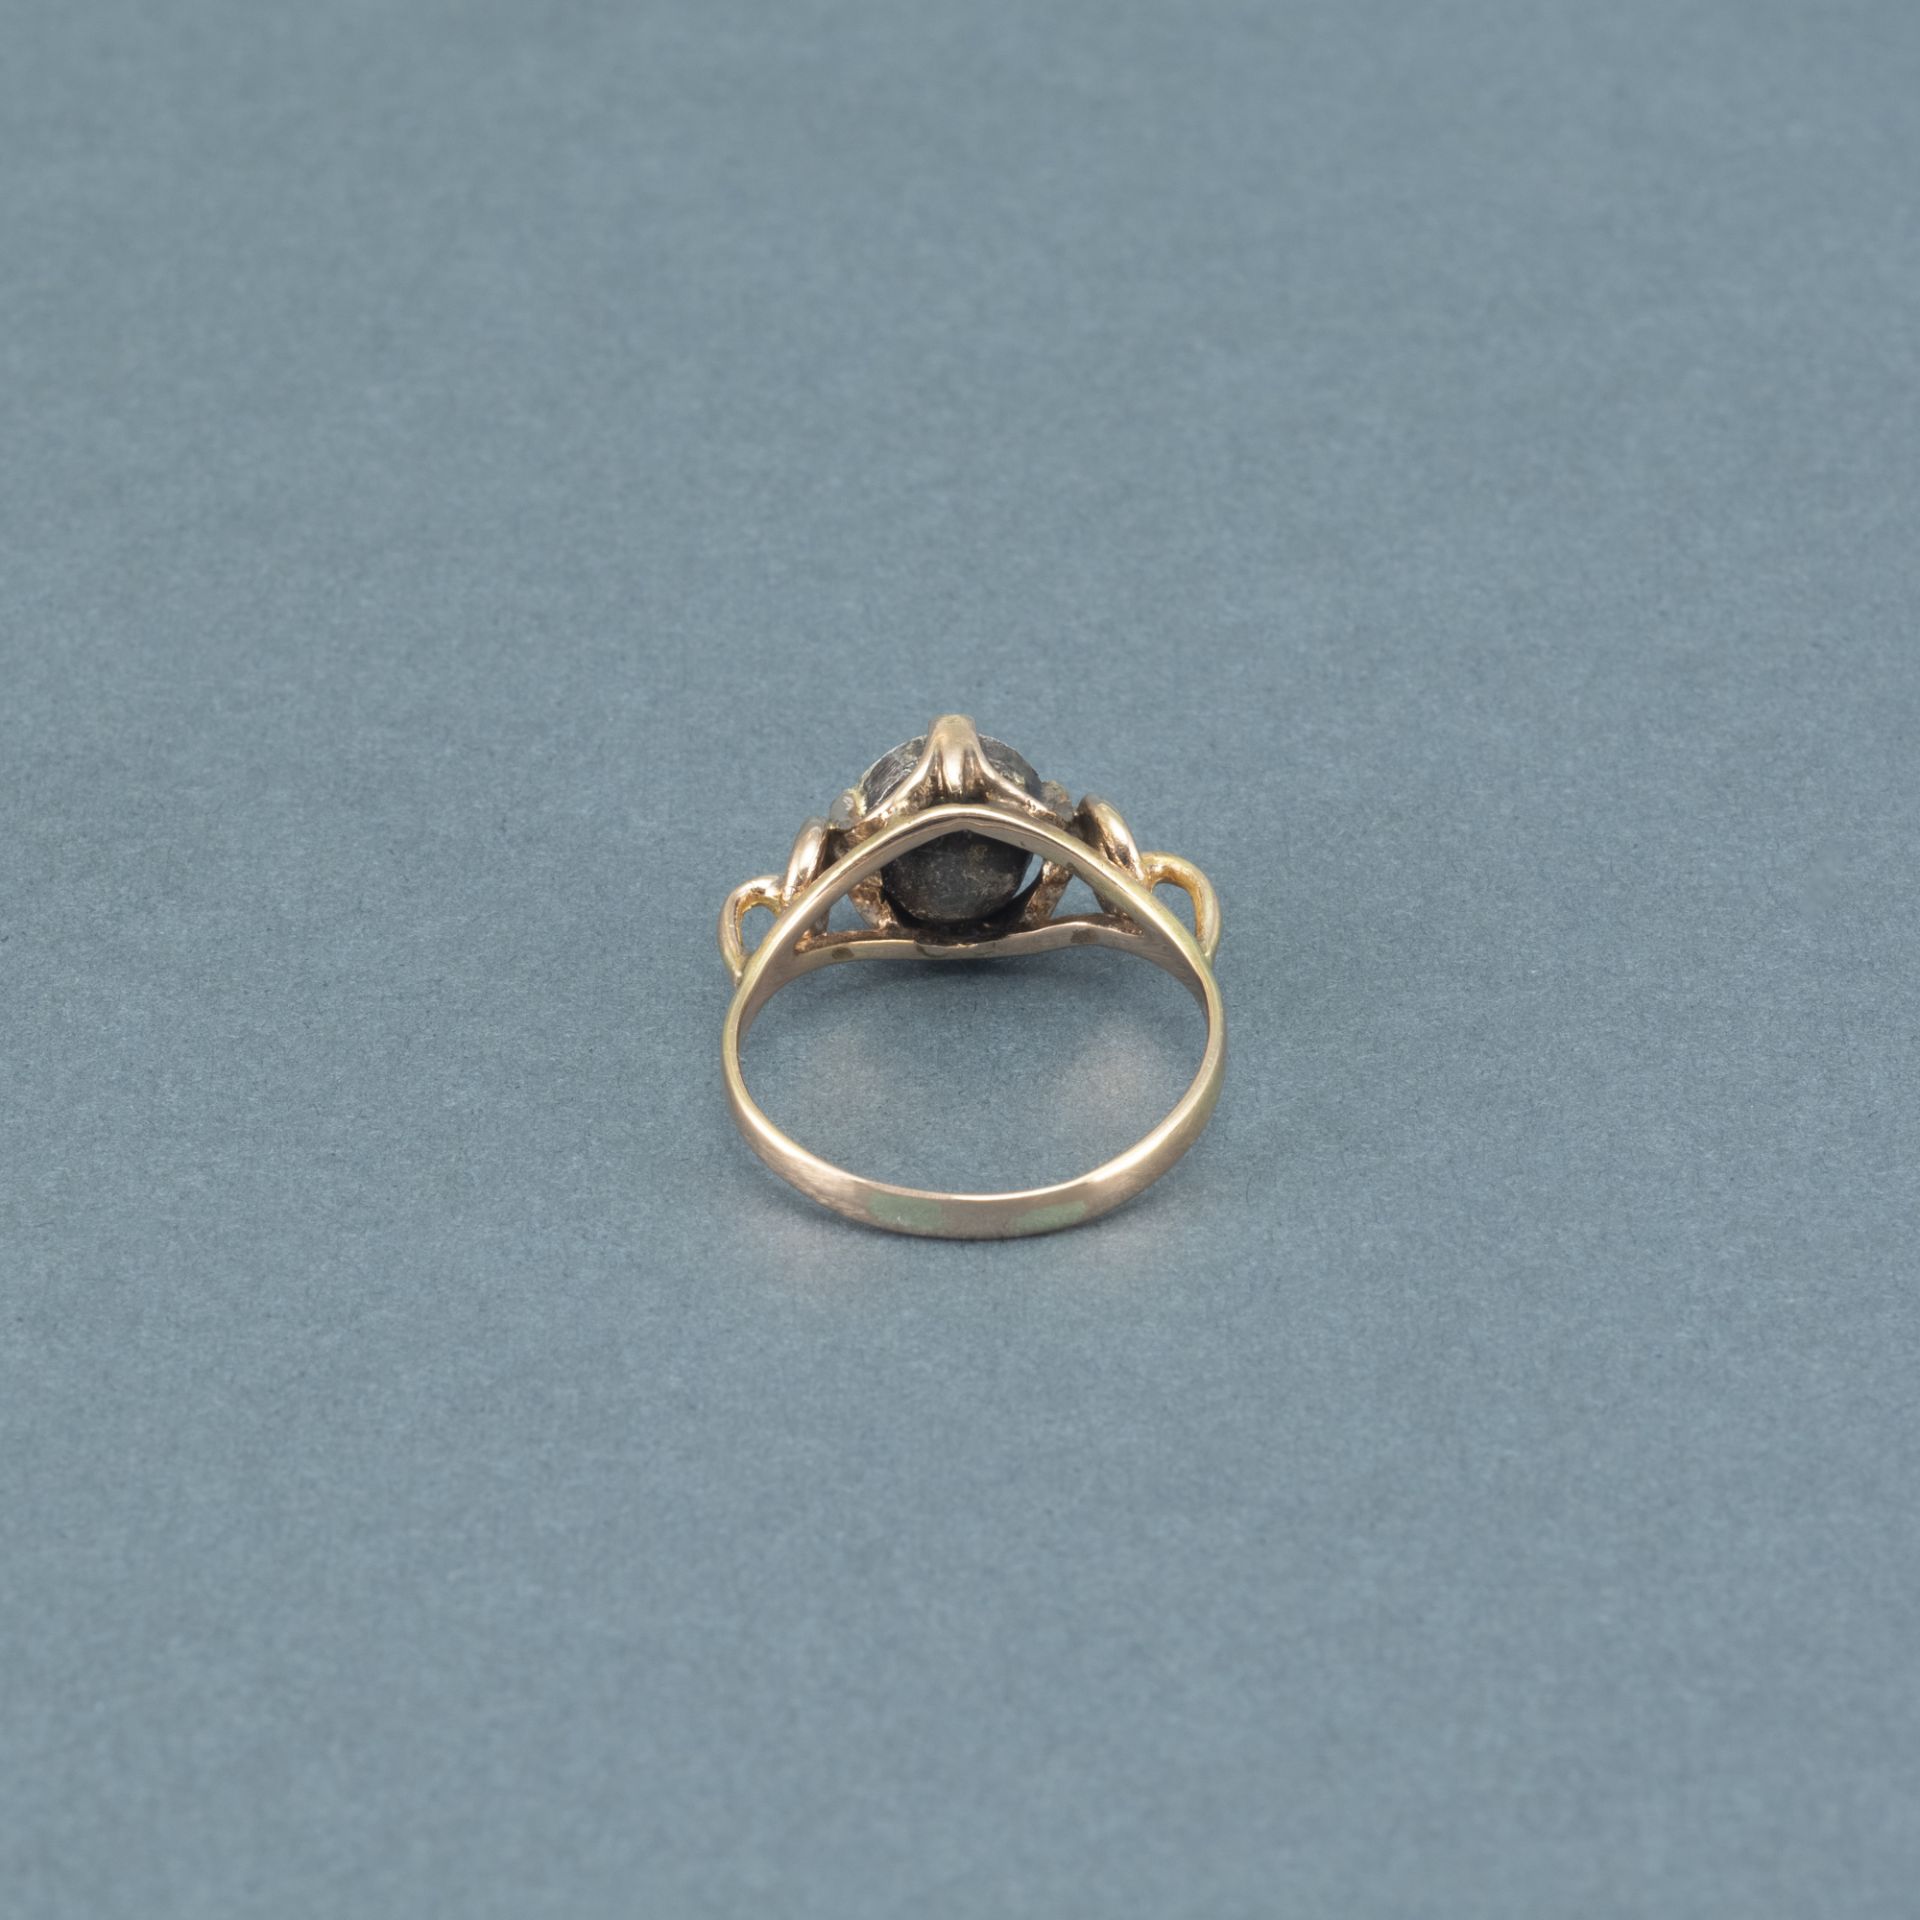  Ring  - Image 3 of 6